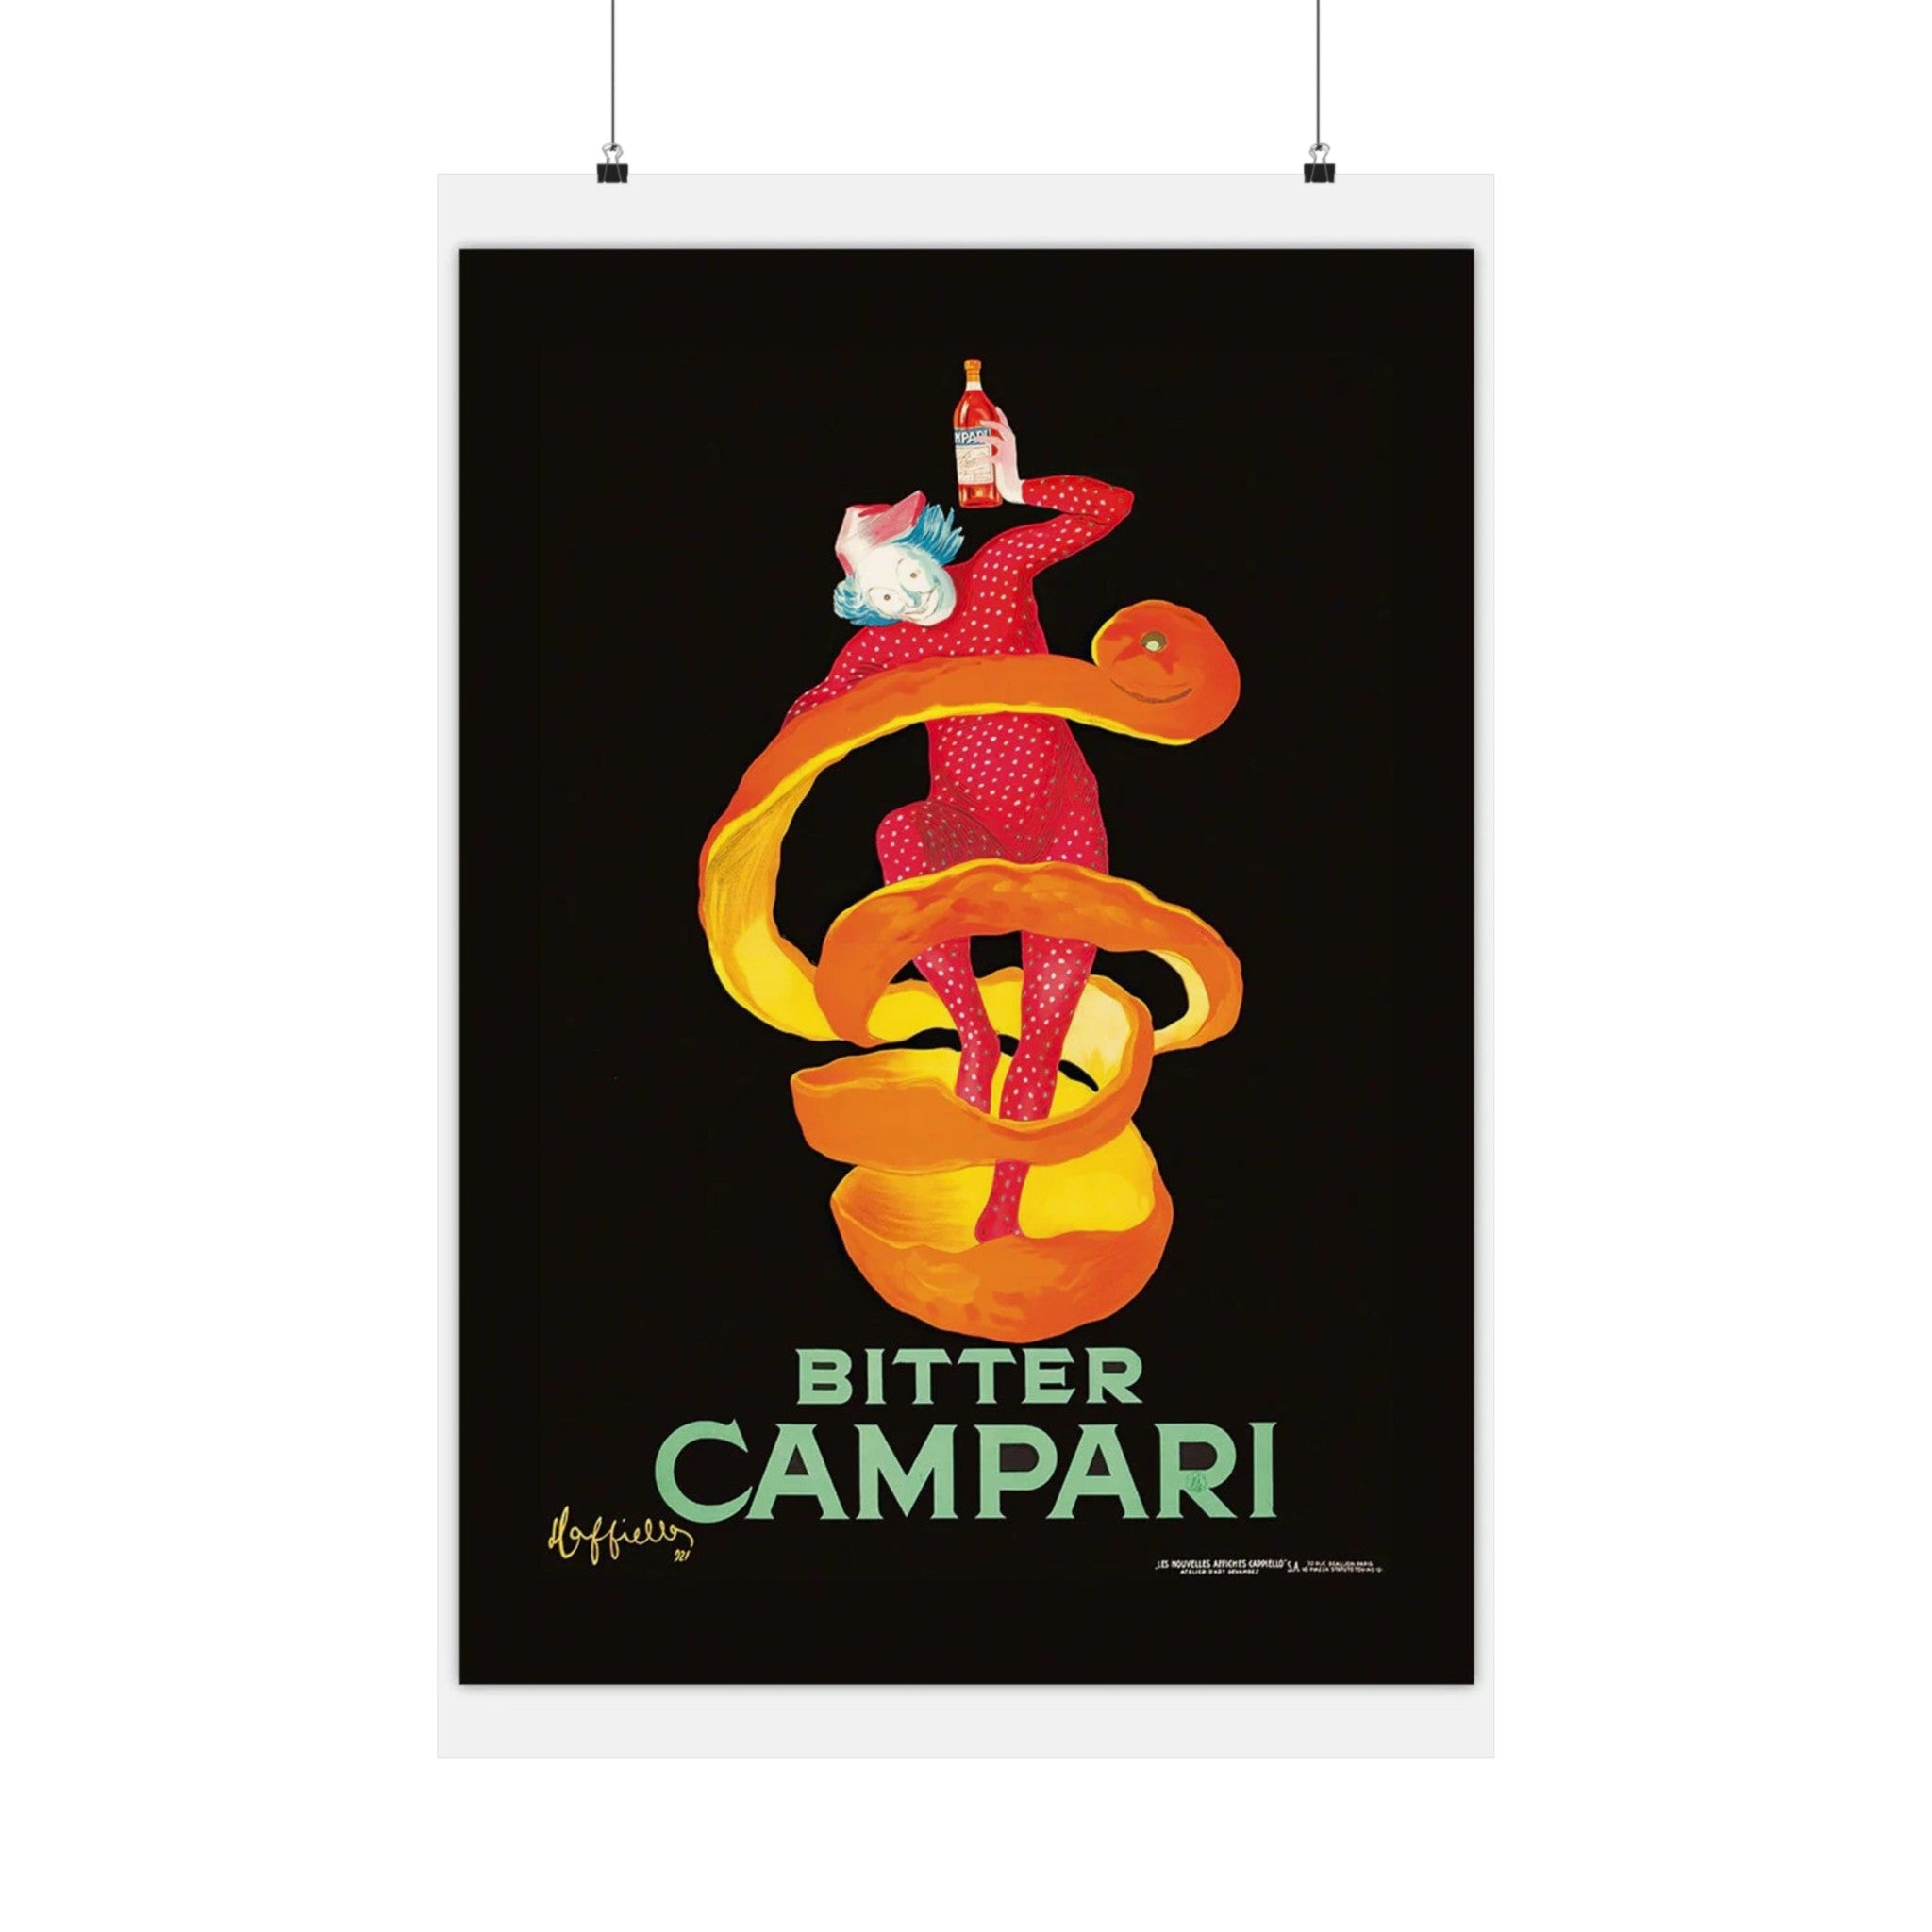 Bitter Campari Wall Print | Retro Advertising Print | Alcohol | Italy